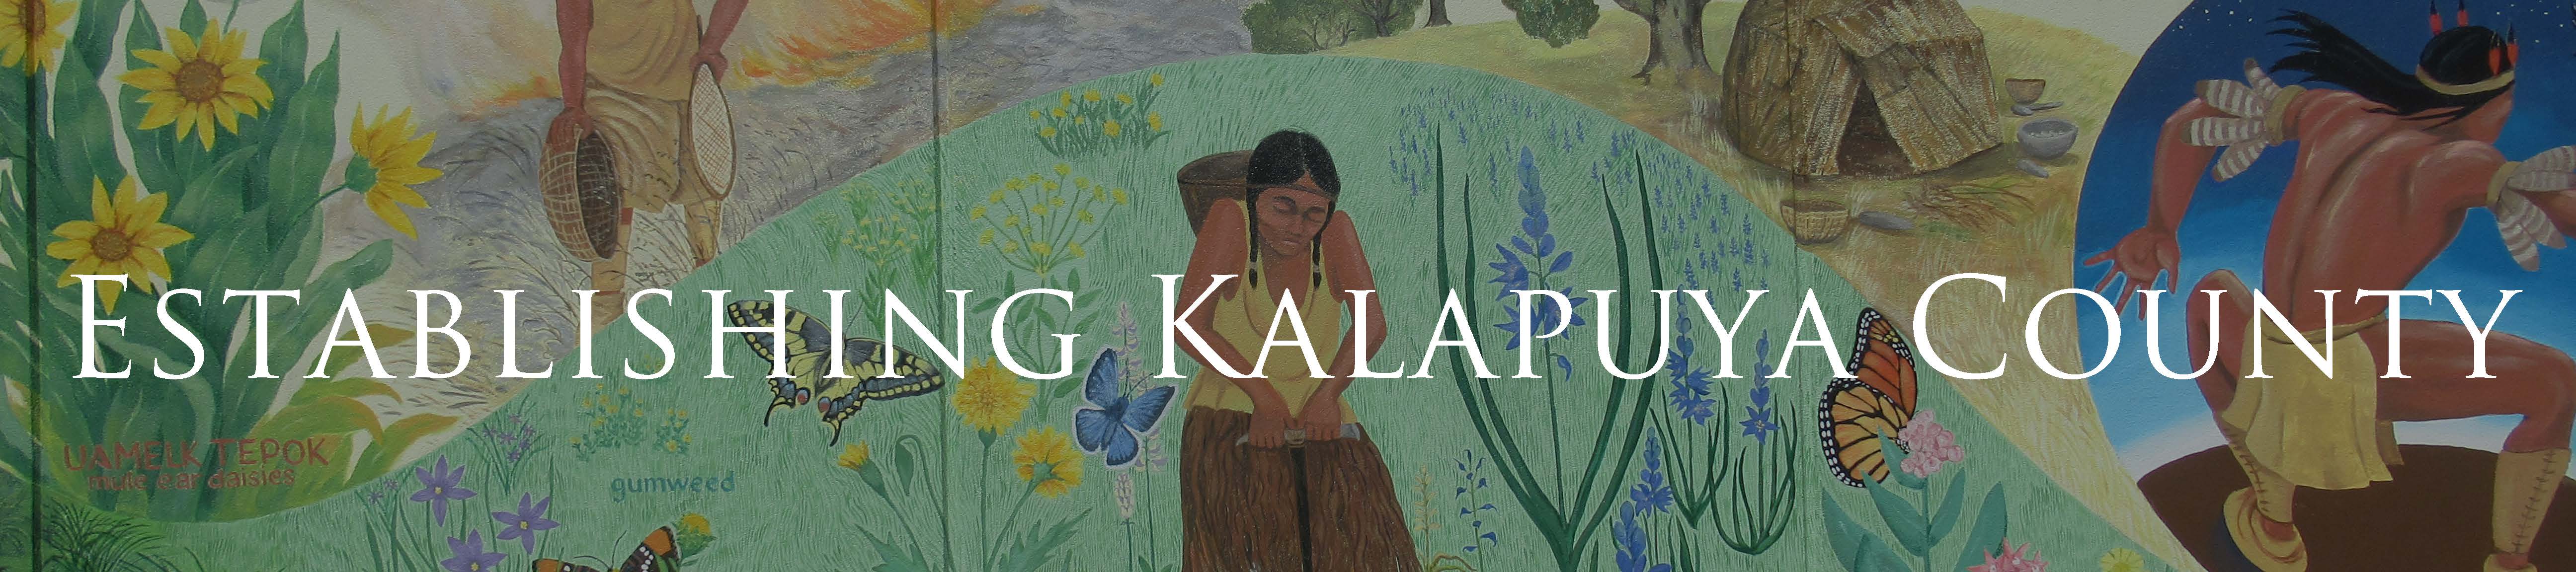 Establishing Kalapuya County Mural Banner